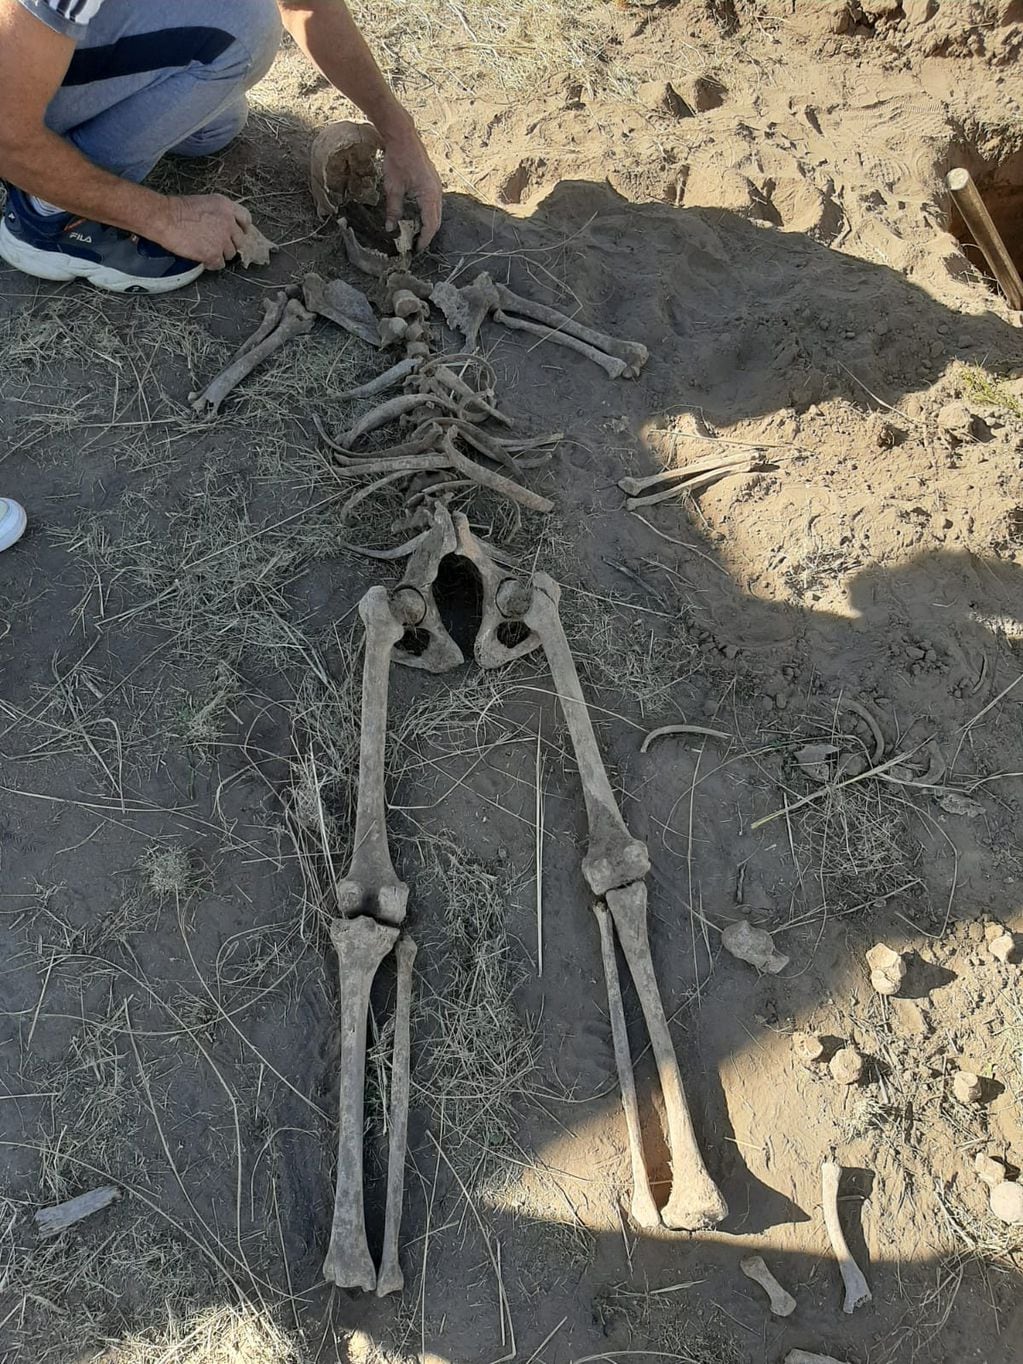 Esqueleto encontrado cerca de Rio V en San Luis